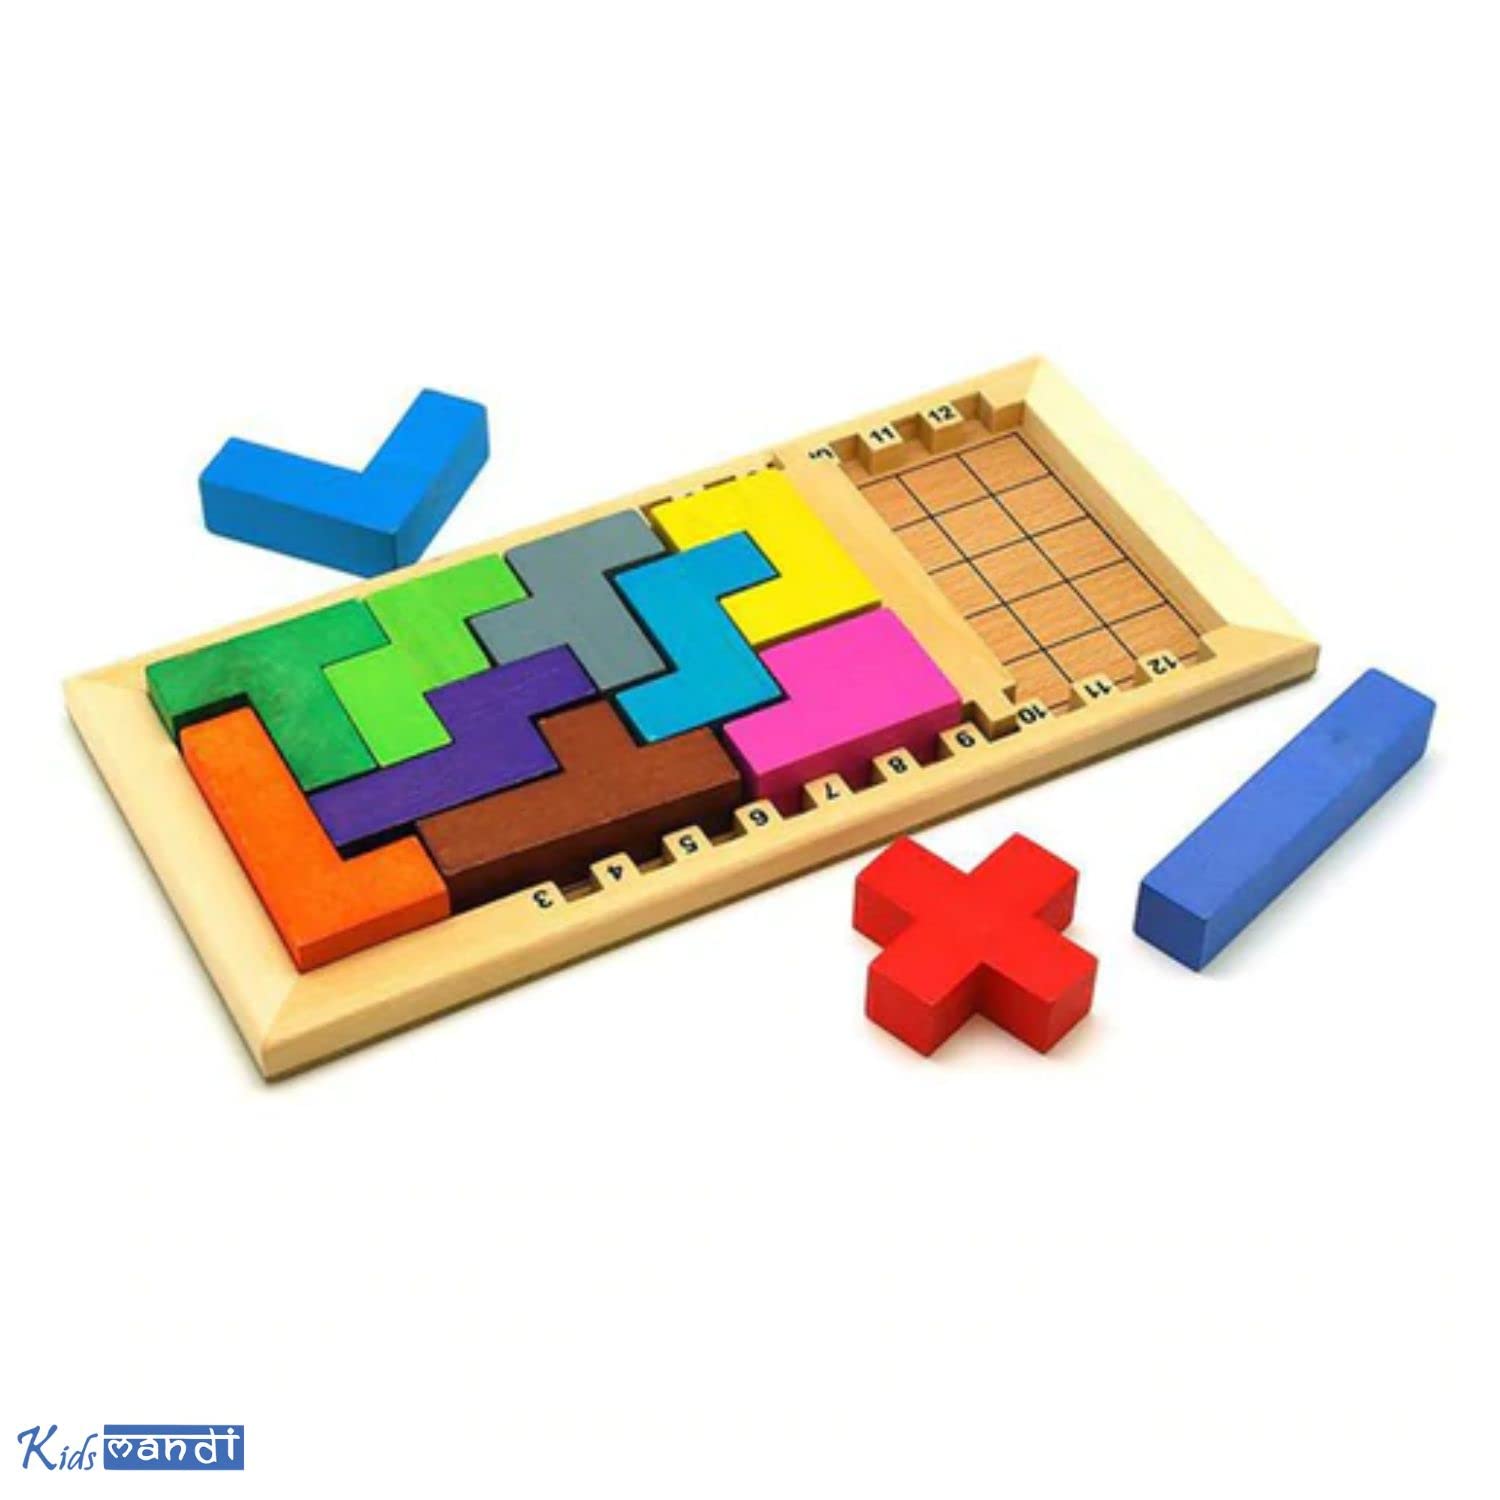 Kids Mandi Wooden Blocks Puzzle Brain Teasers Toy Tangram Jigsaw